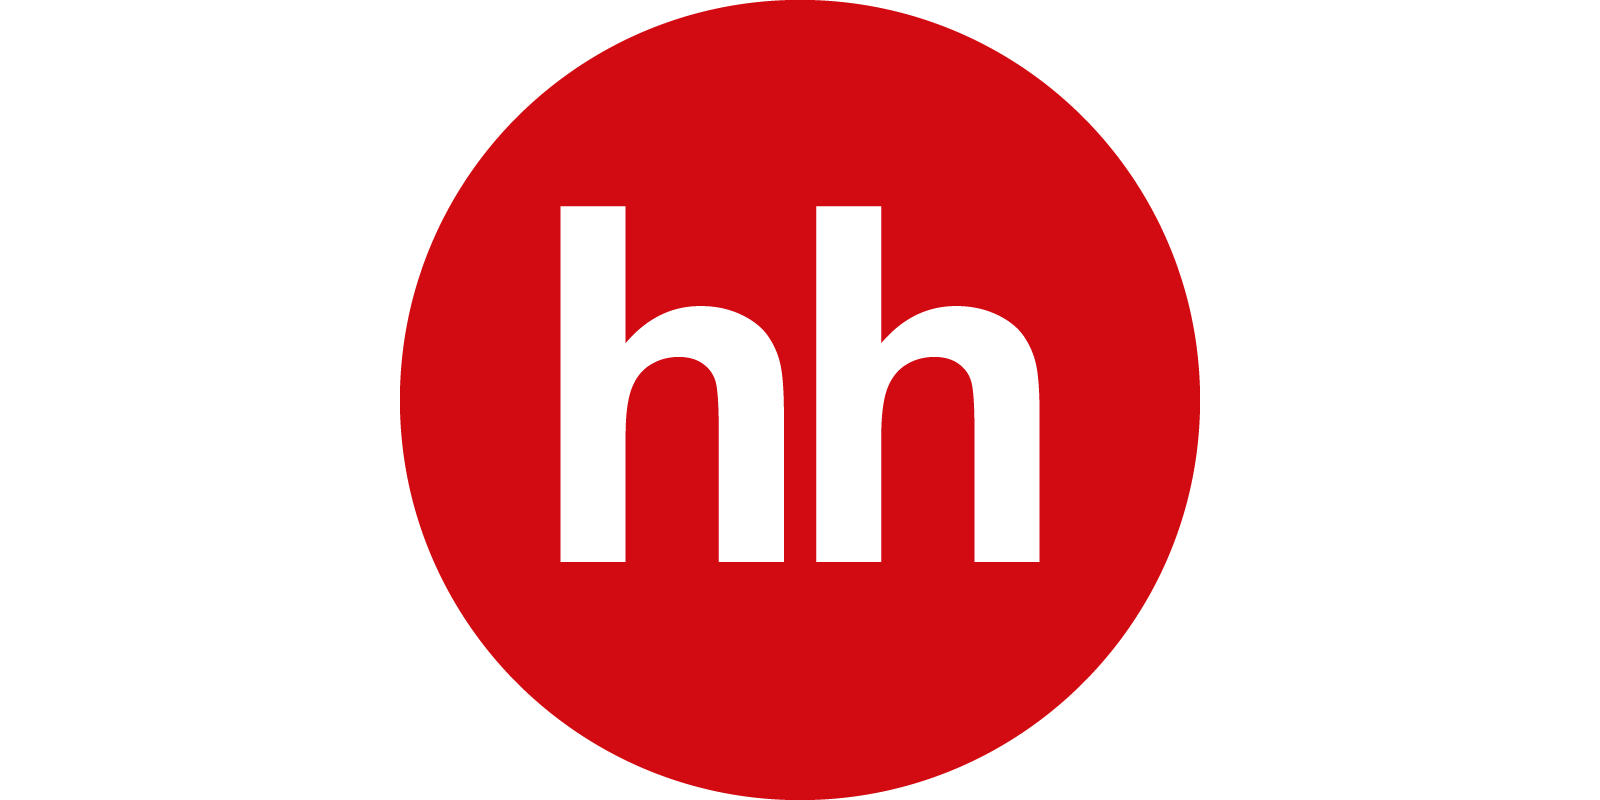 HeadHunter - Оплата услуг новым работодателем